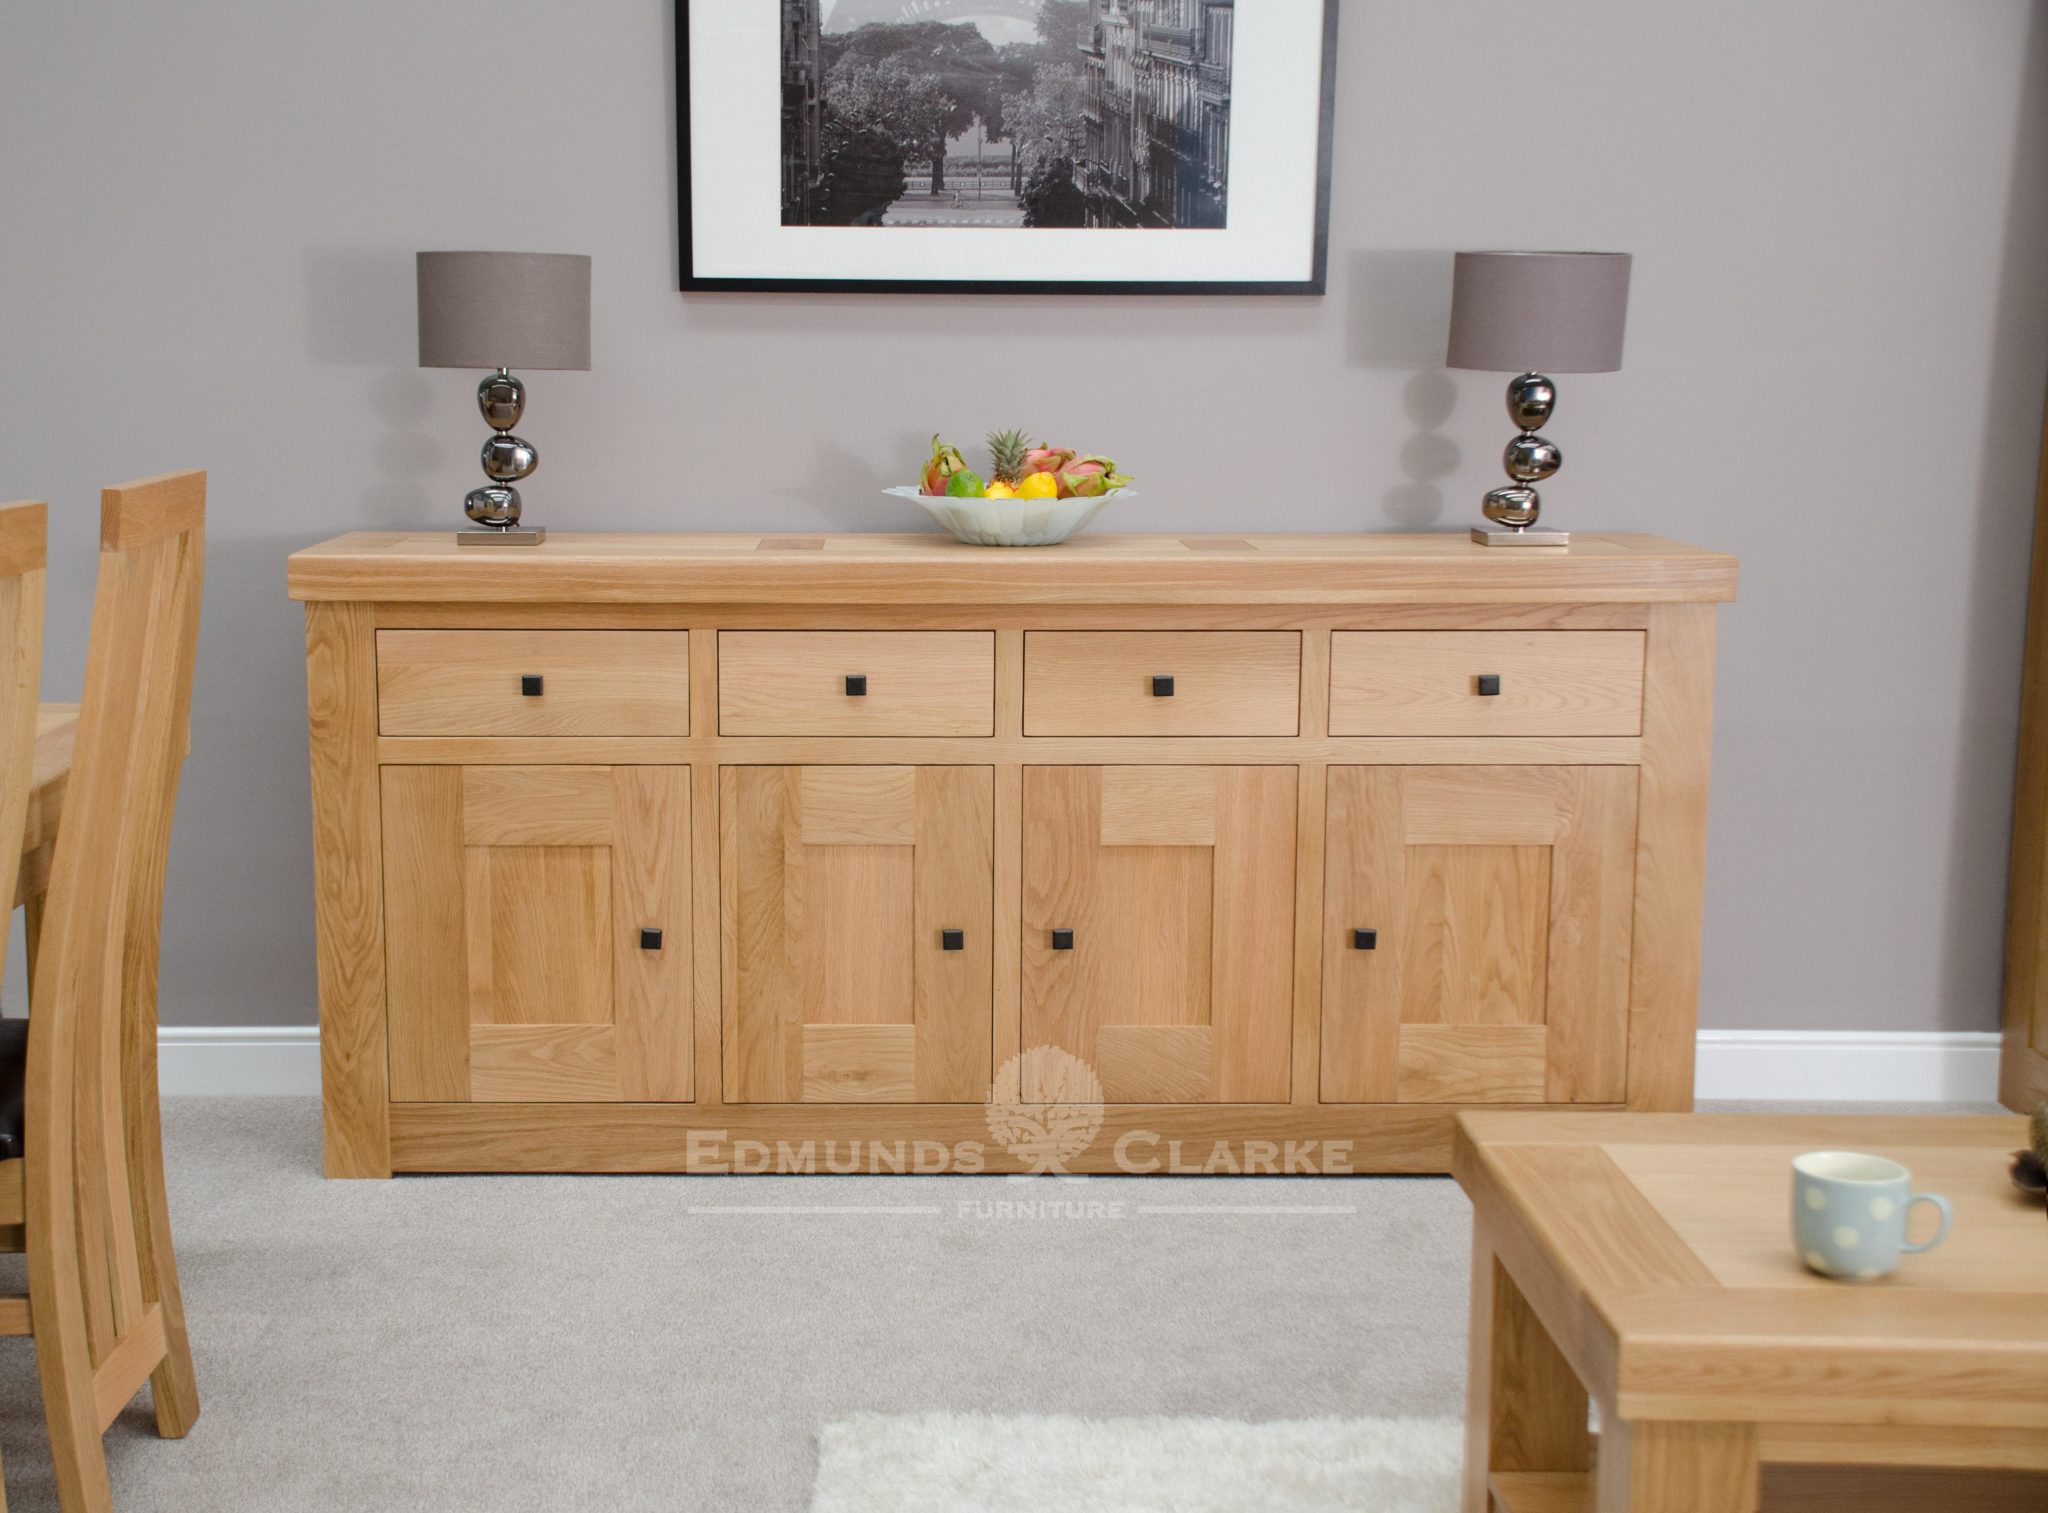 Hadleigh solid oak chunky large sideboard | Edmunds & Clarke Furniture